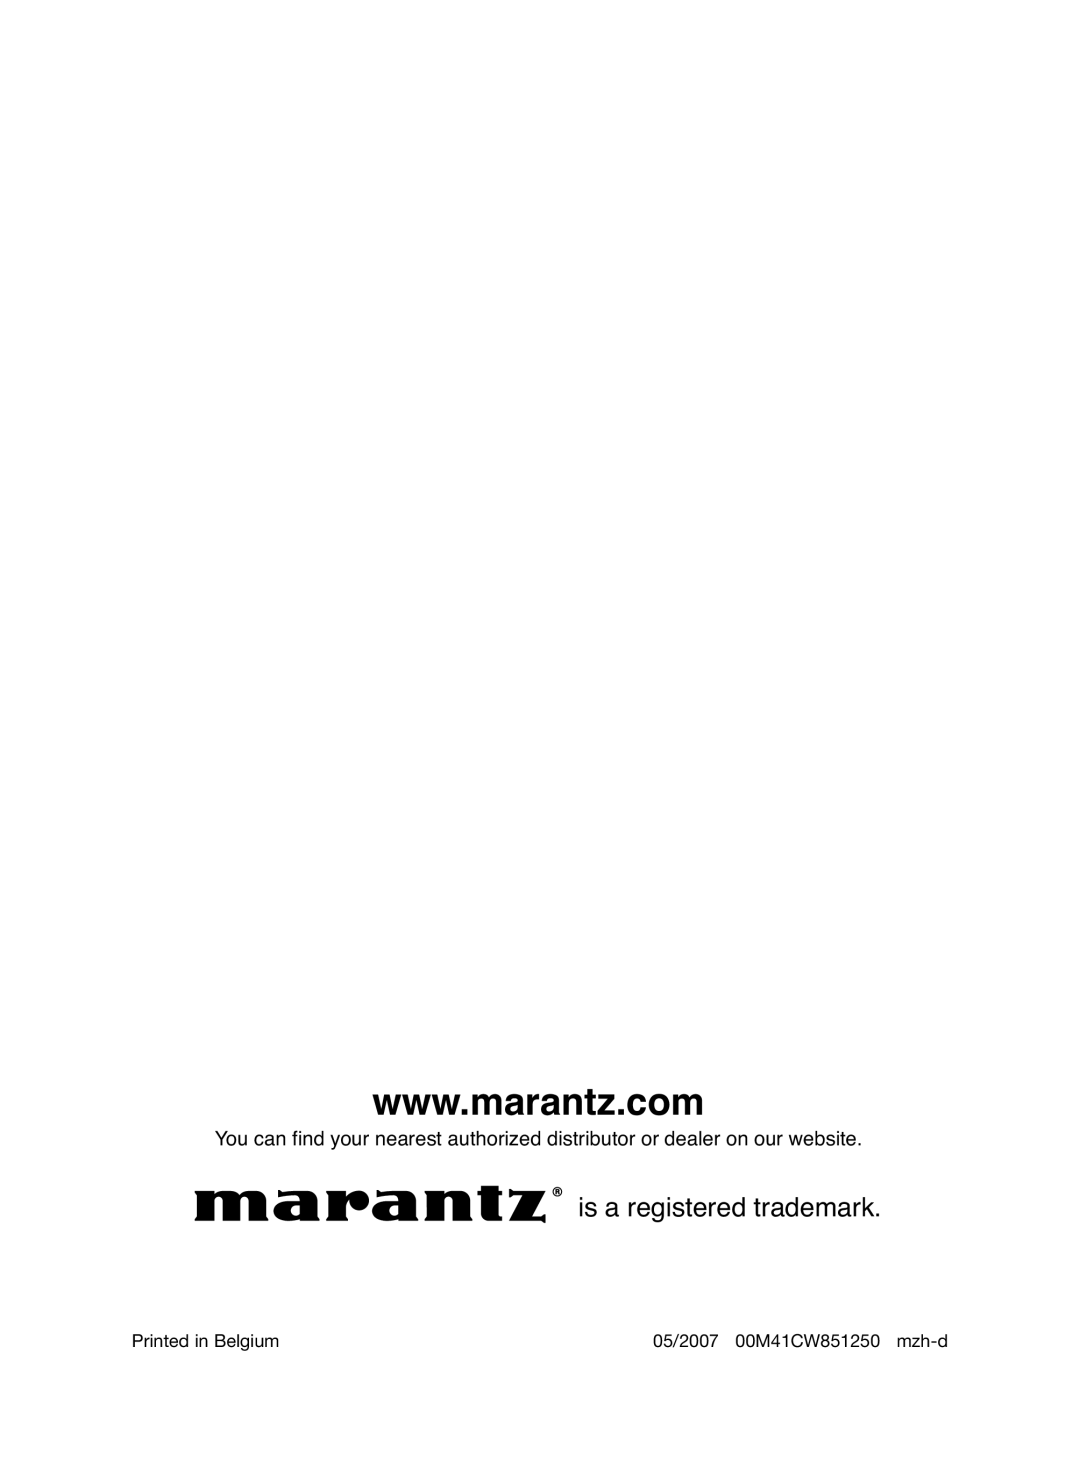 Marantz RX9001 manual is a registered trademark, Printed in Belgium, 05/2007 00M41CW851250 mzh-d 